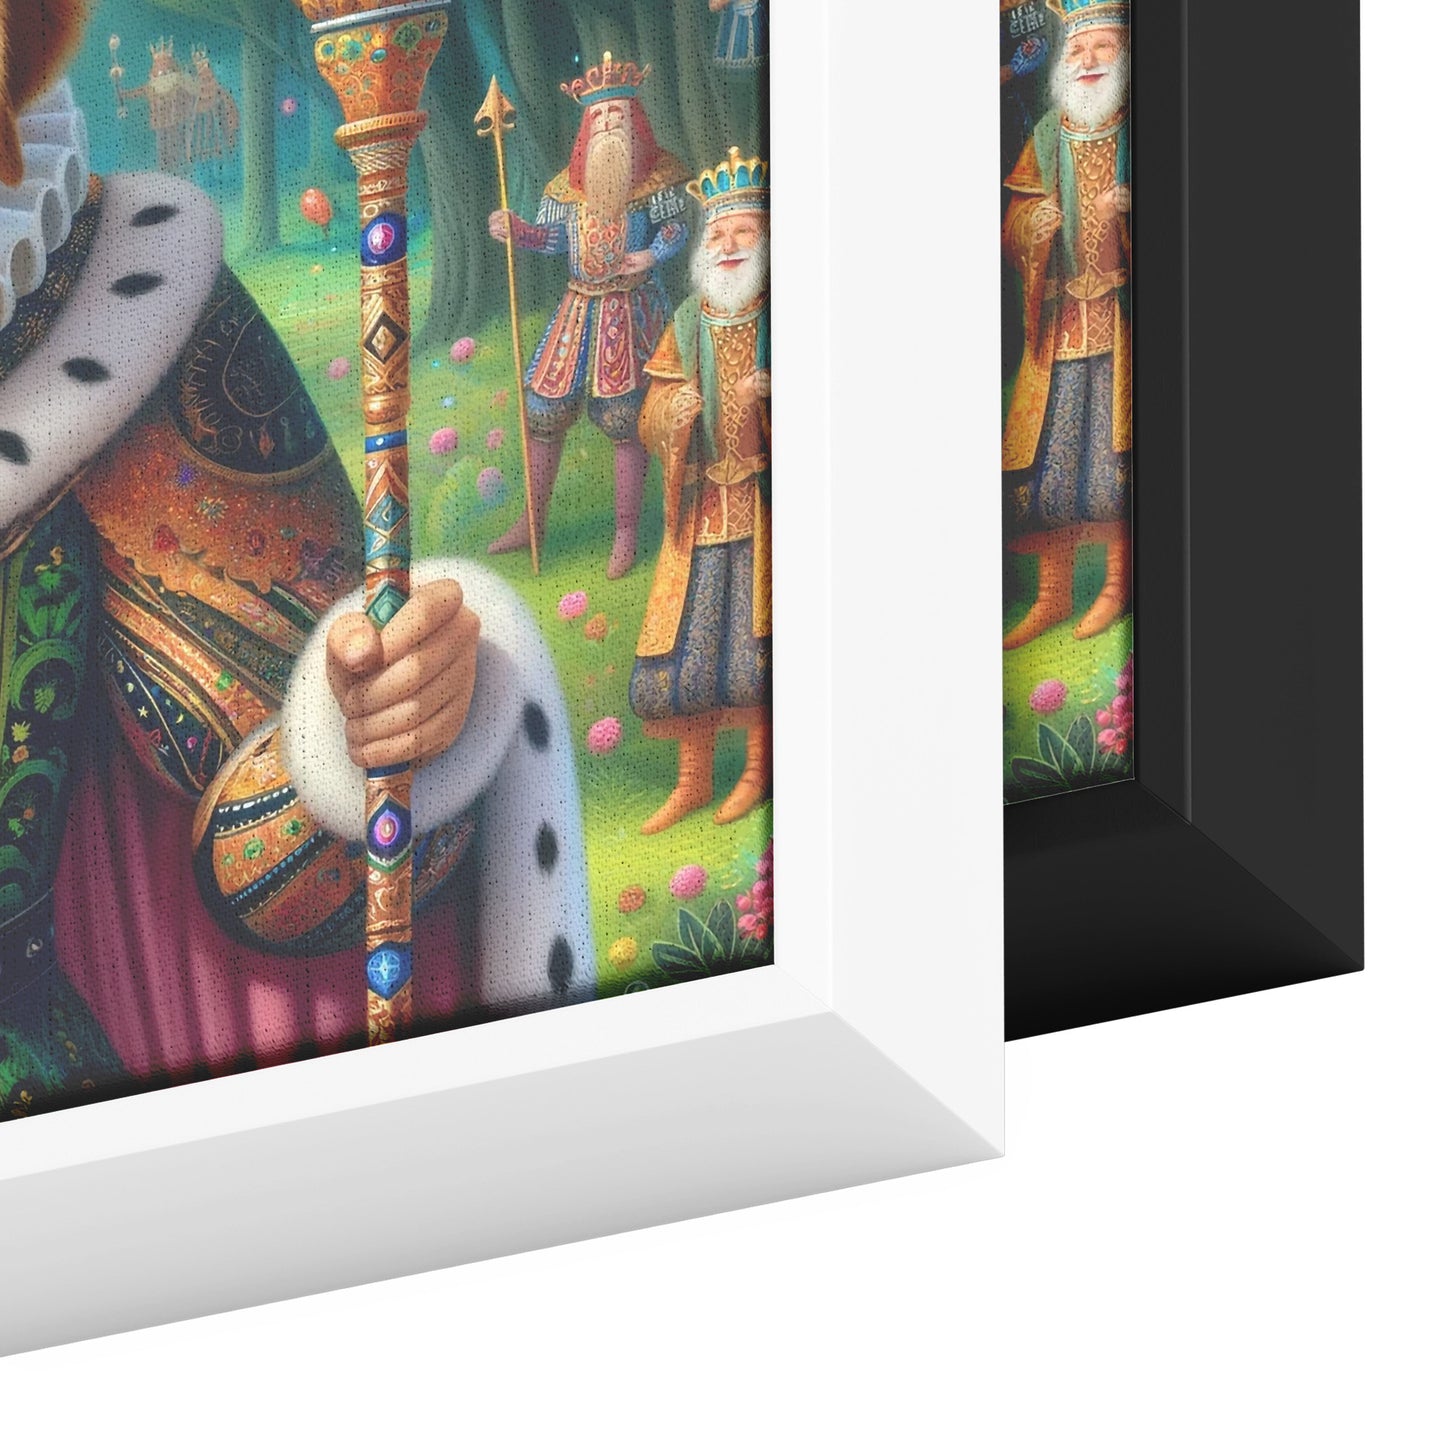 Enchanted Forest King - Framed Canvas